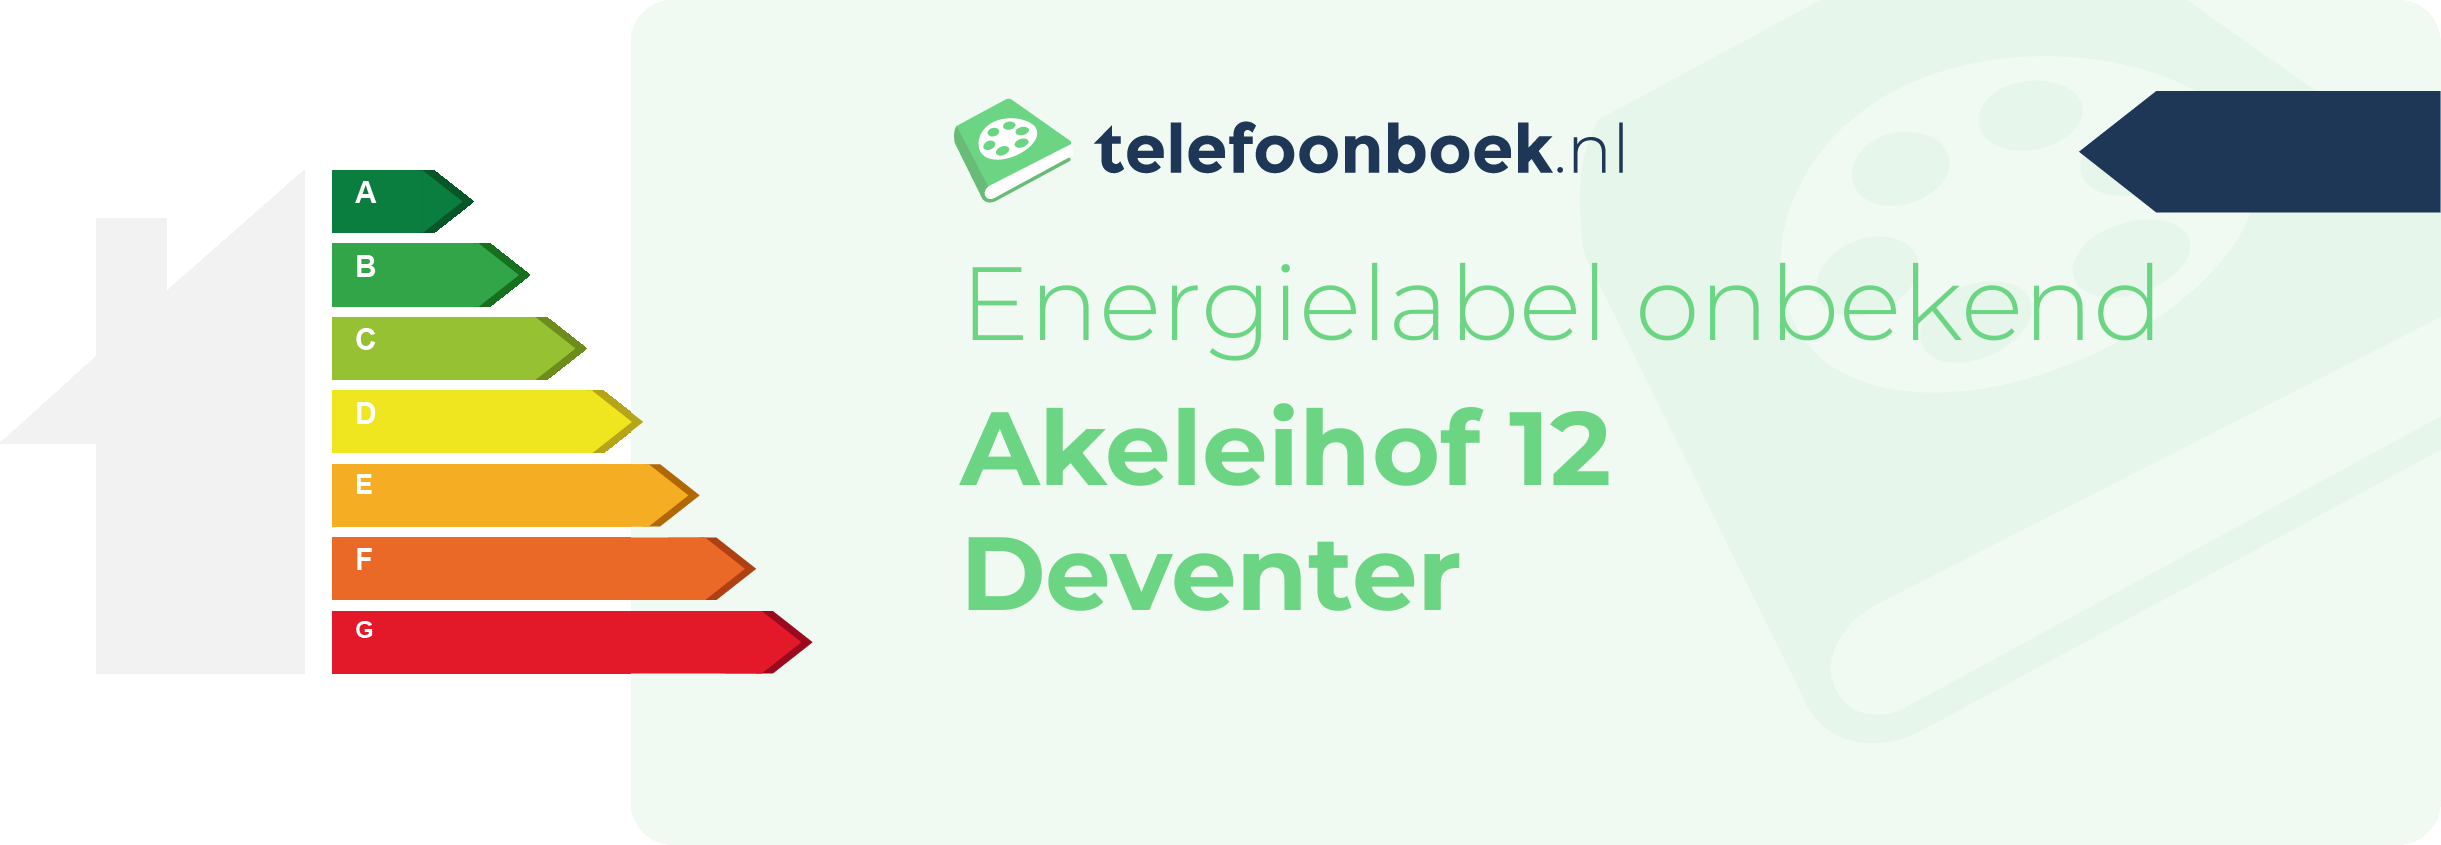 Energielabel Akeleihof 12 Deventer